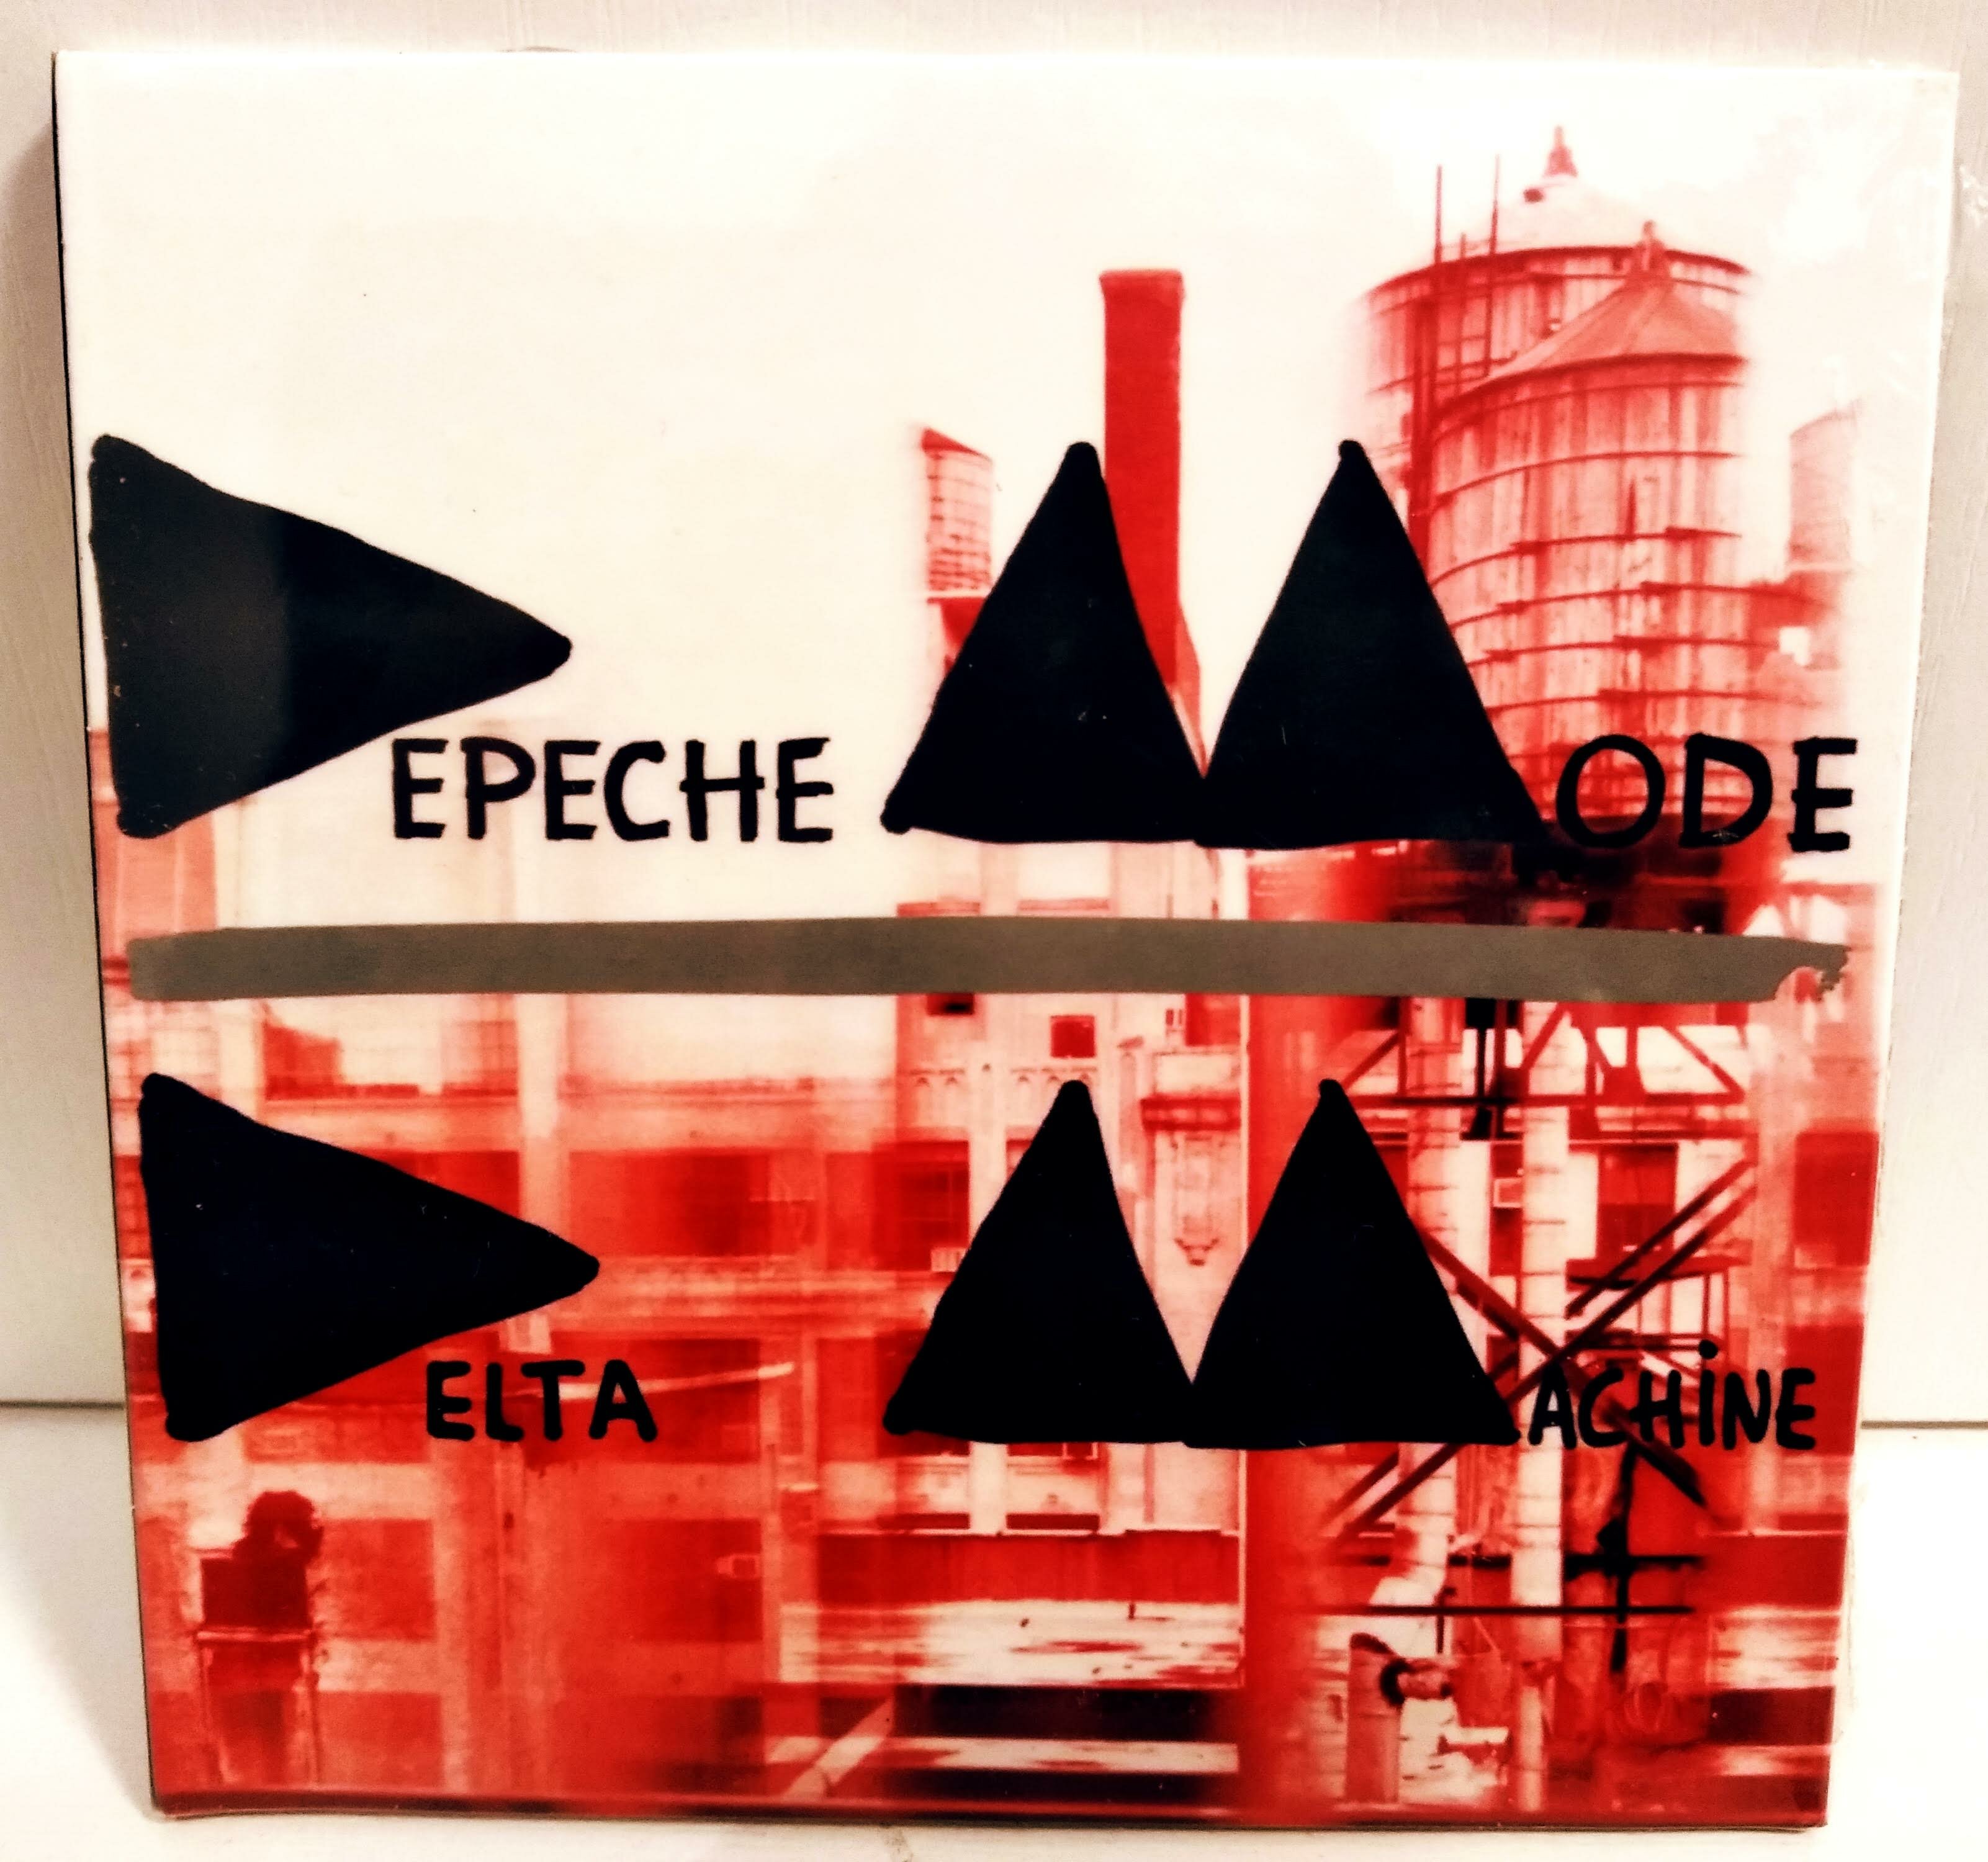 DEPECHE MODE - "Delta Machine" (CD)